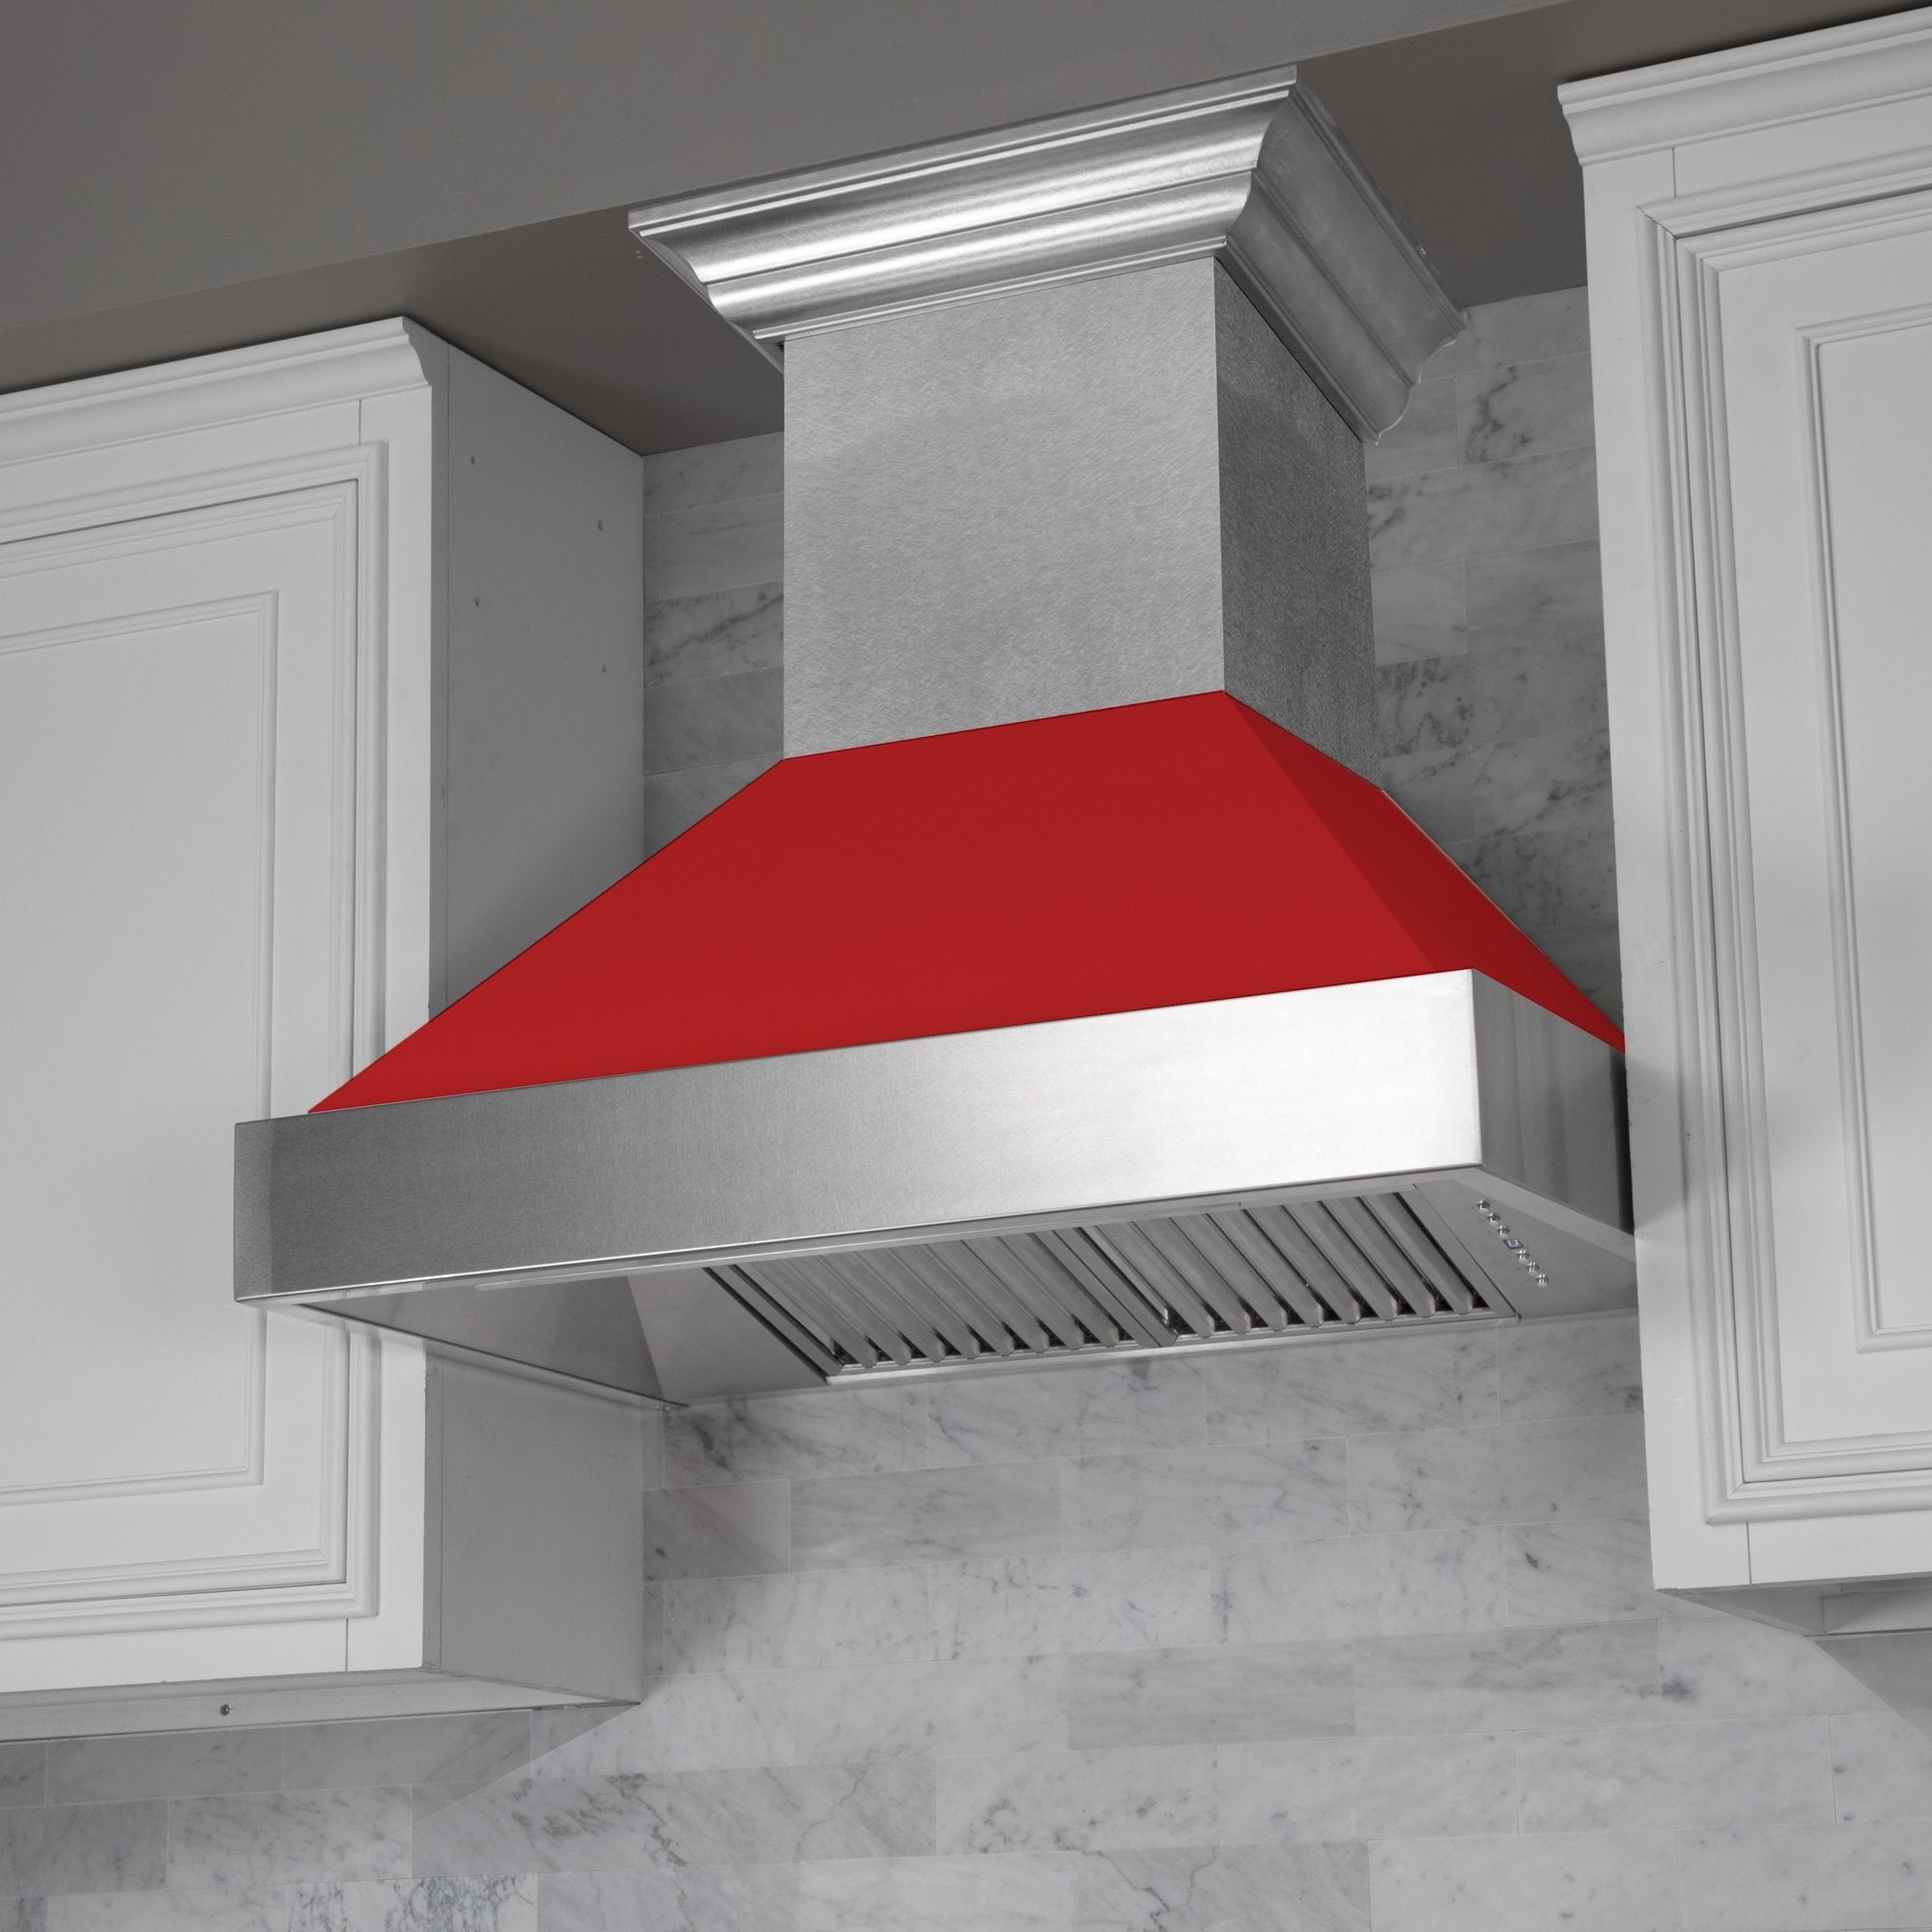 ZLINE Kitchen and Bath, ZLINE DuraSnow® Stainless Steel Range Hood with Red Matte Shell (8654RM), 8654RM-30,